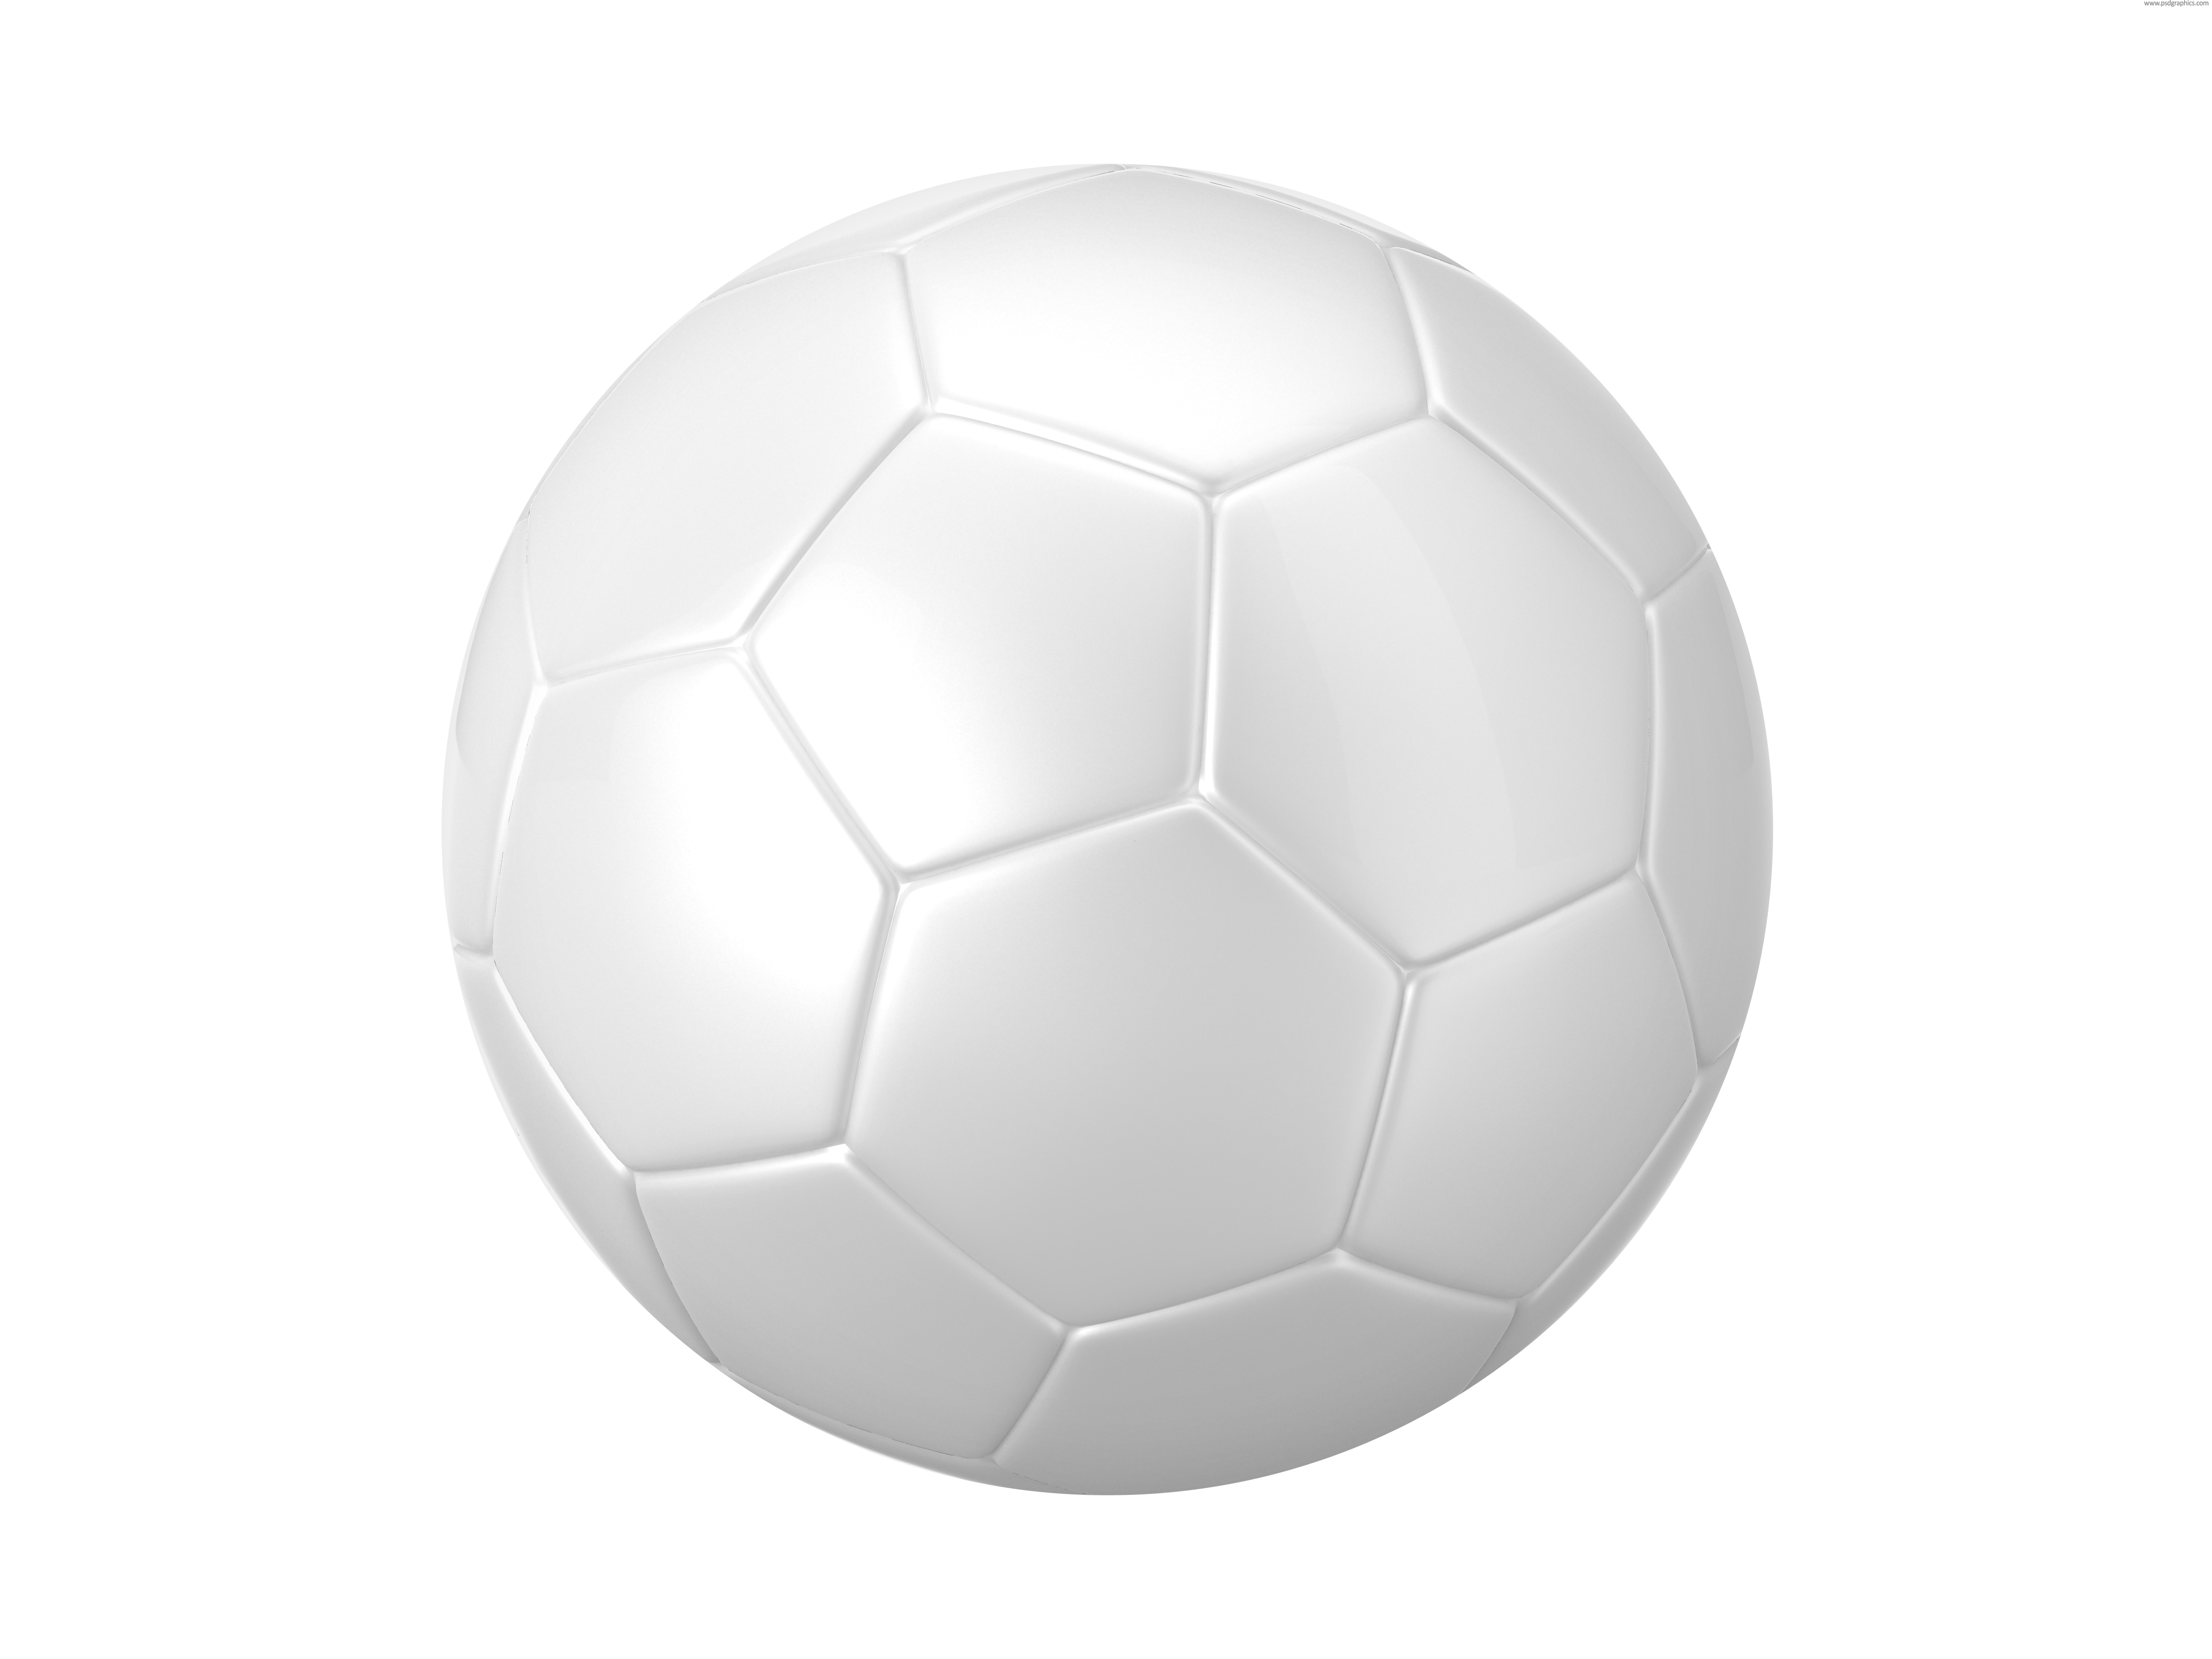 Black and white football (soccer) balls | PSDGraphics